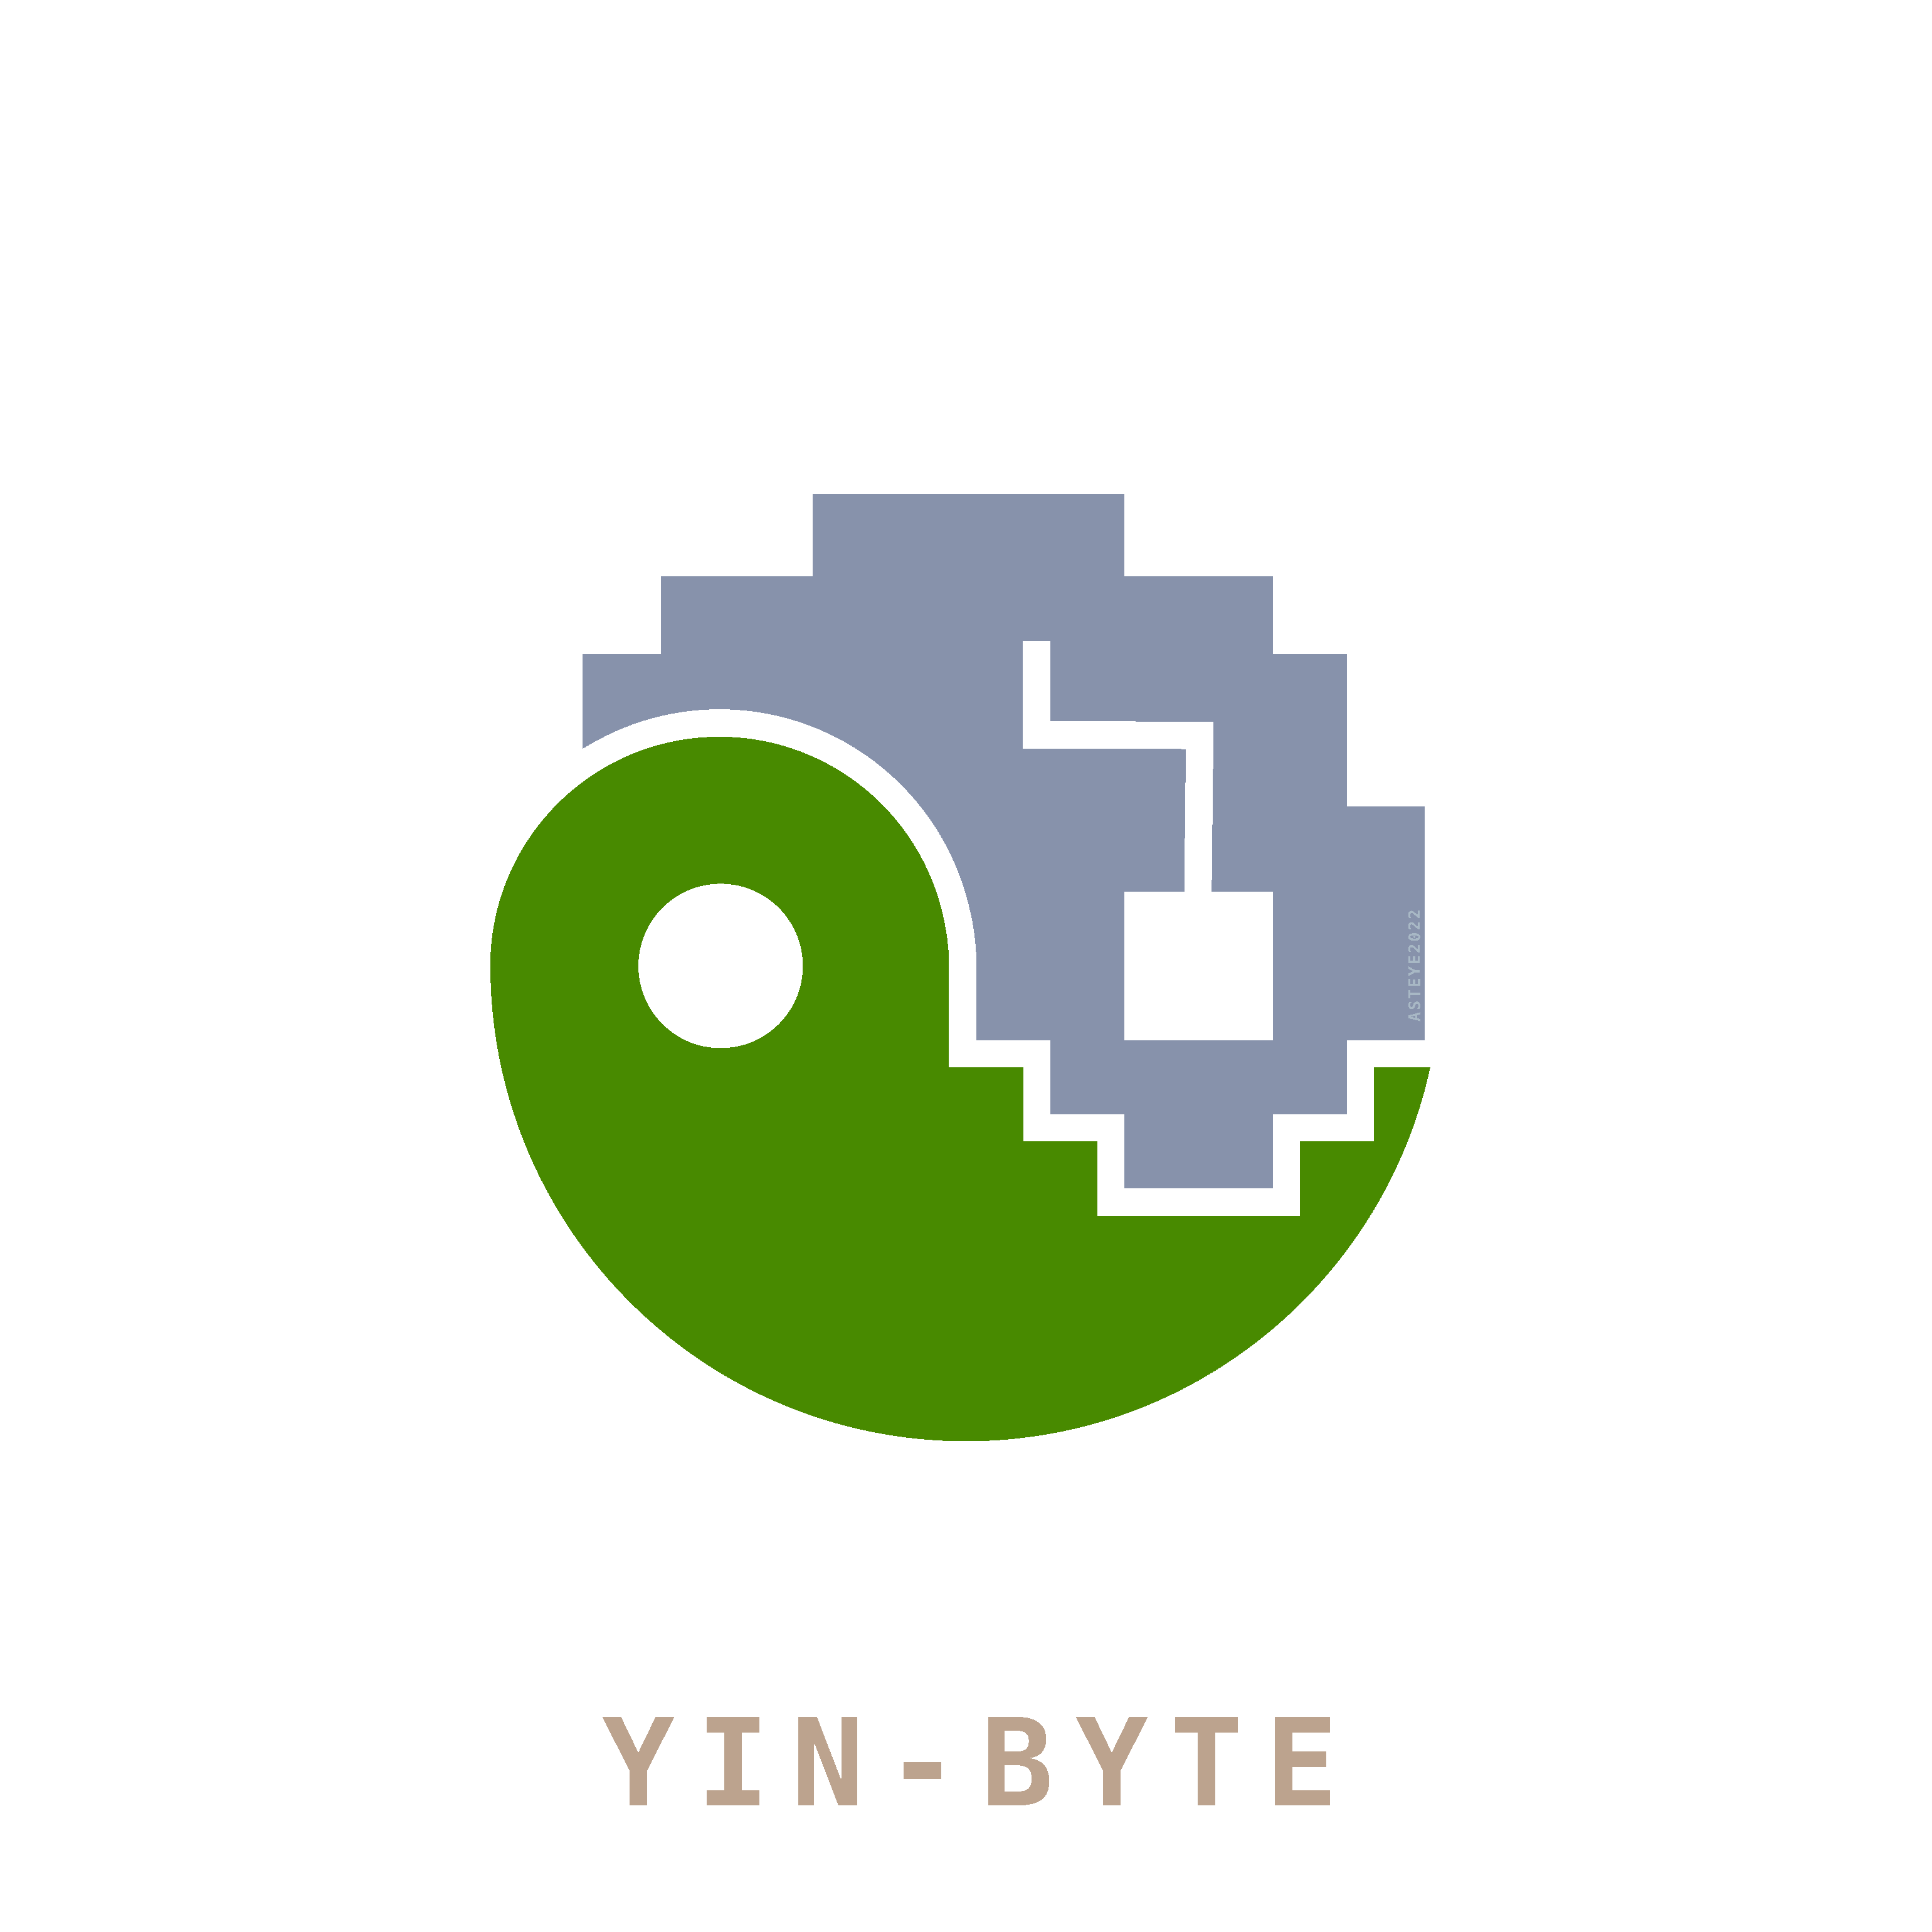 Yin-Byte ☯ Bit-Yang, Illustration ASTEYE 20220921